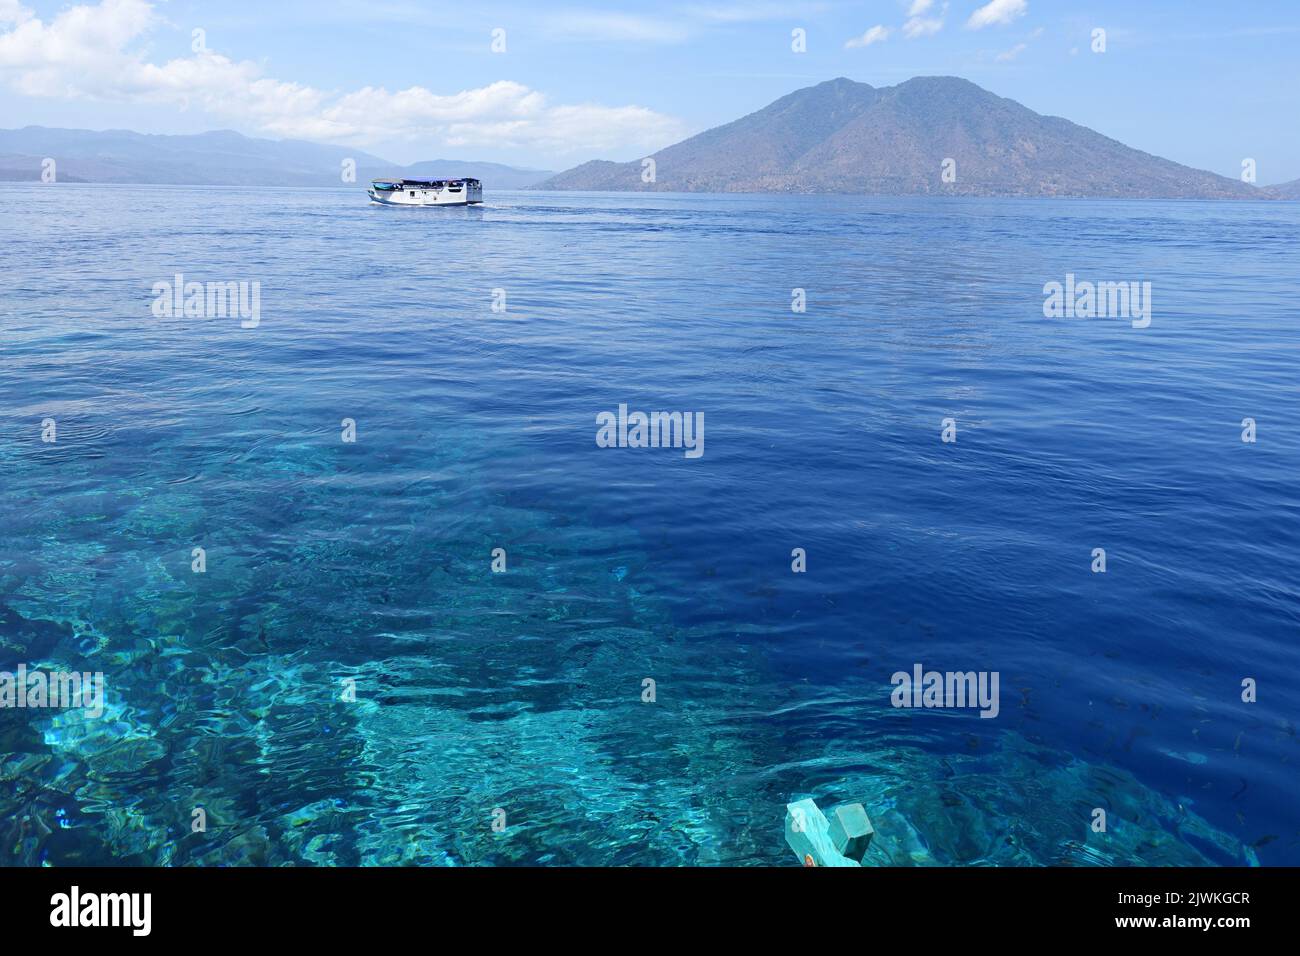 Indonesia Alor Island - Reef edge and local ferry Stock Photo